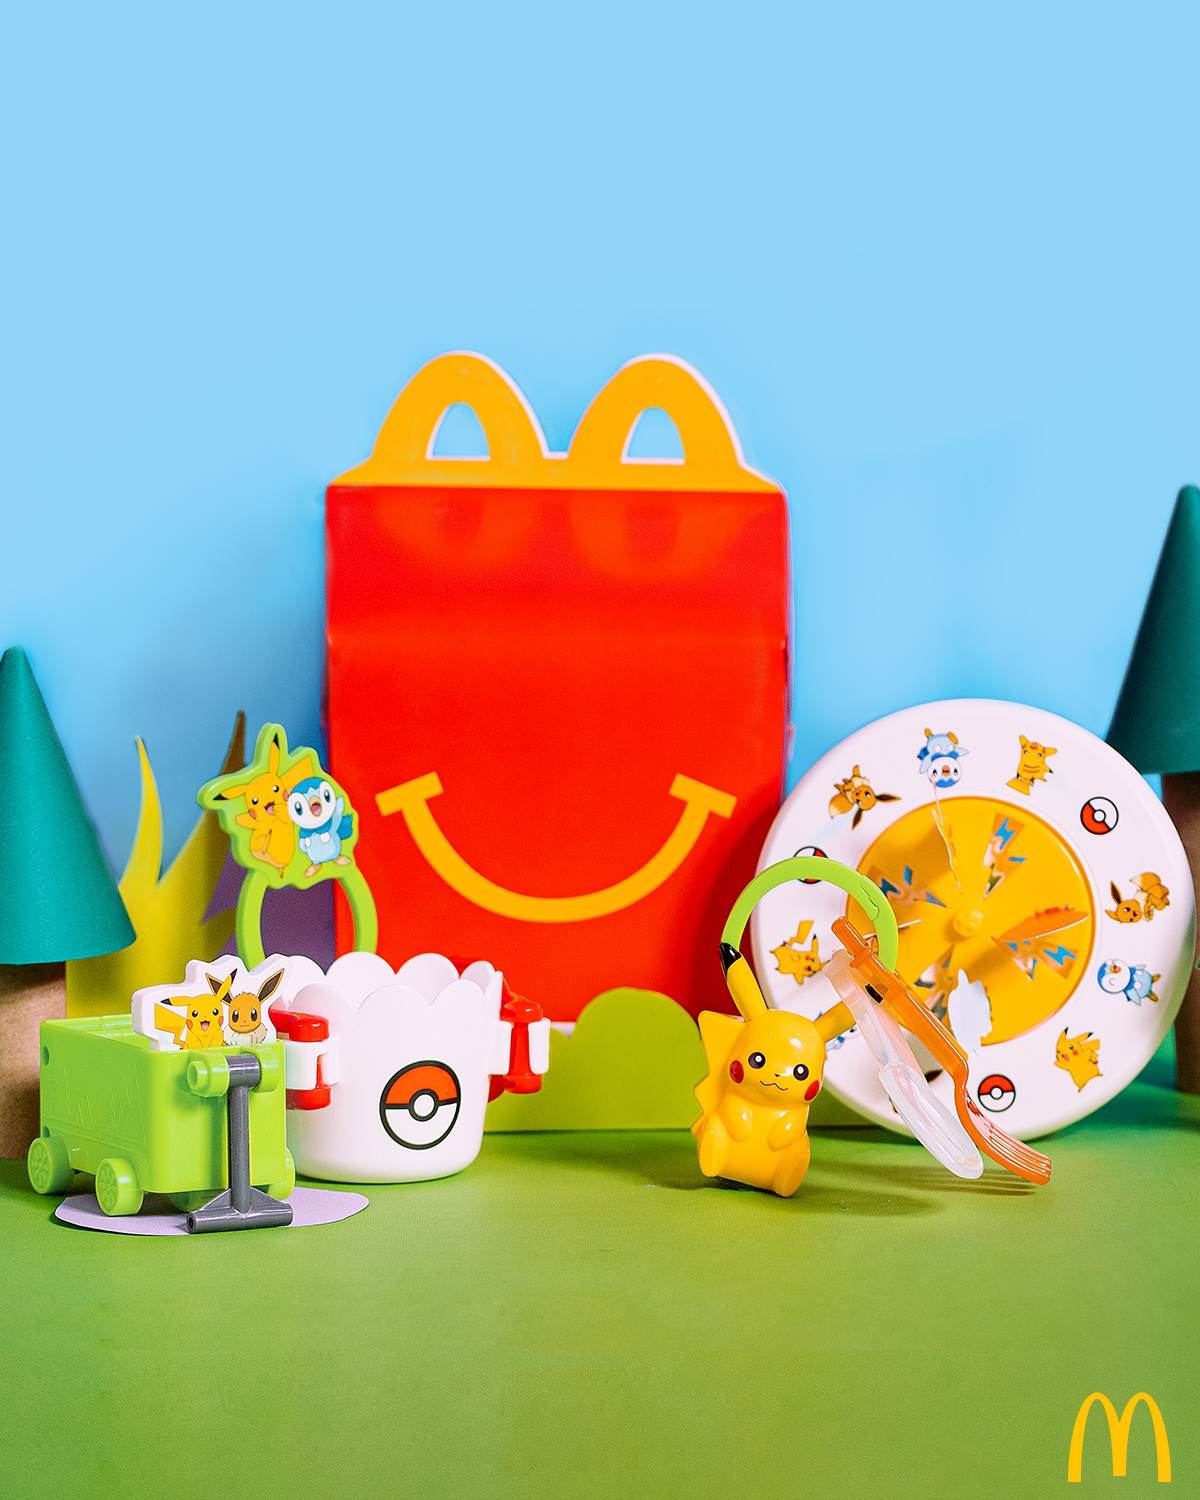 mcdonalds vs jollibee - mcdo happy meal toy pokemon